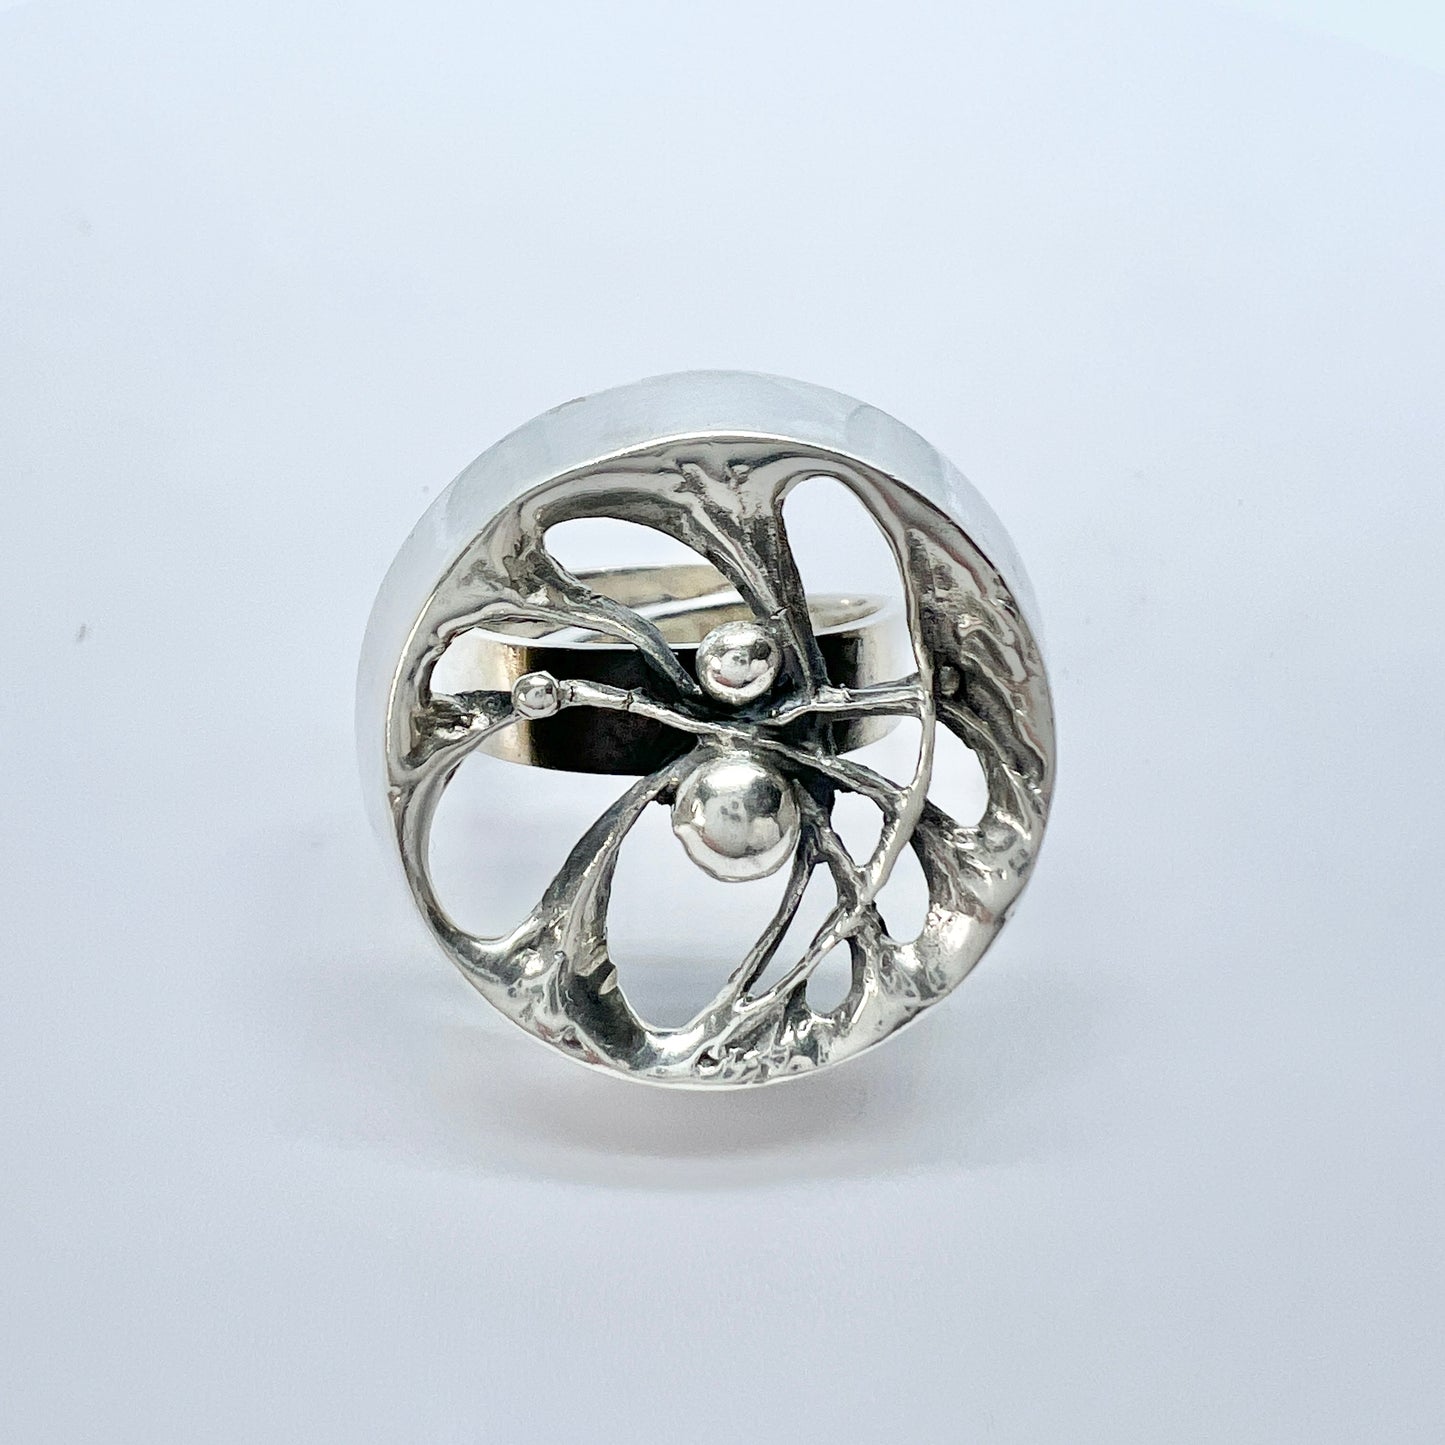 Sten & Laine, Finland 1976. Vintage Sterling Silver Ring. Design Spider Web.